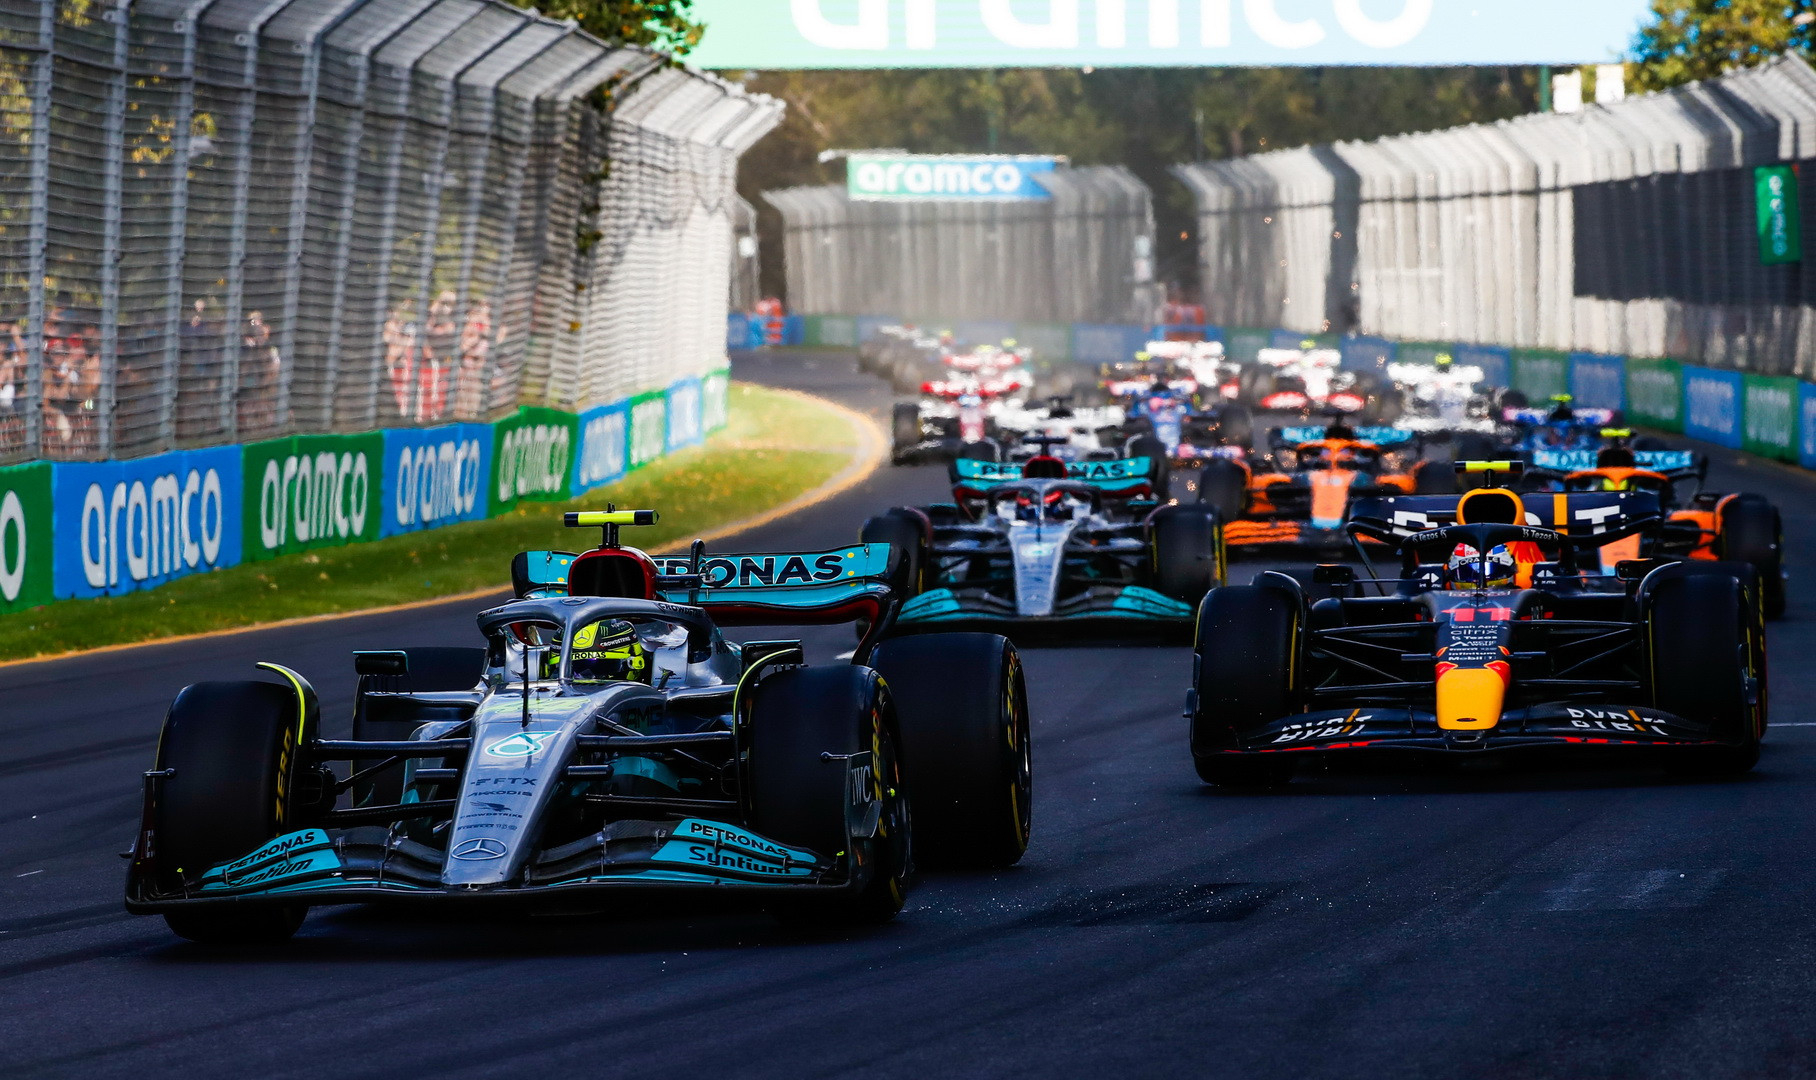 Melbourne Signs New Agreement To Keep Hosting F1 Australian Grand Prix-F1 Grand Prix Calendar 2022